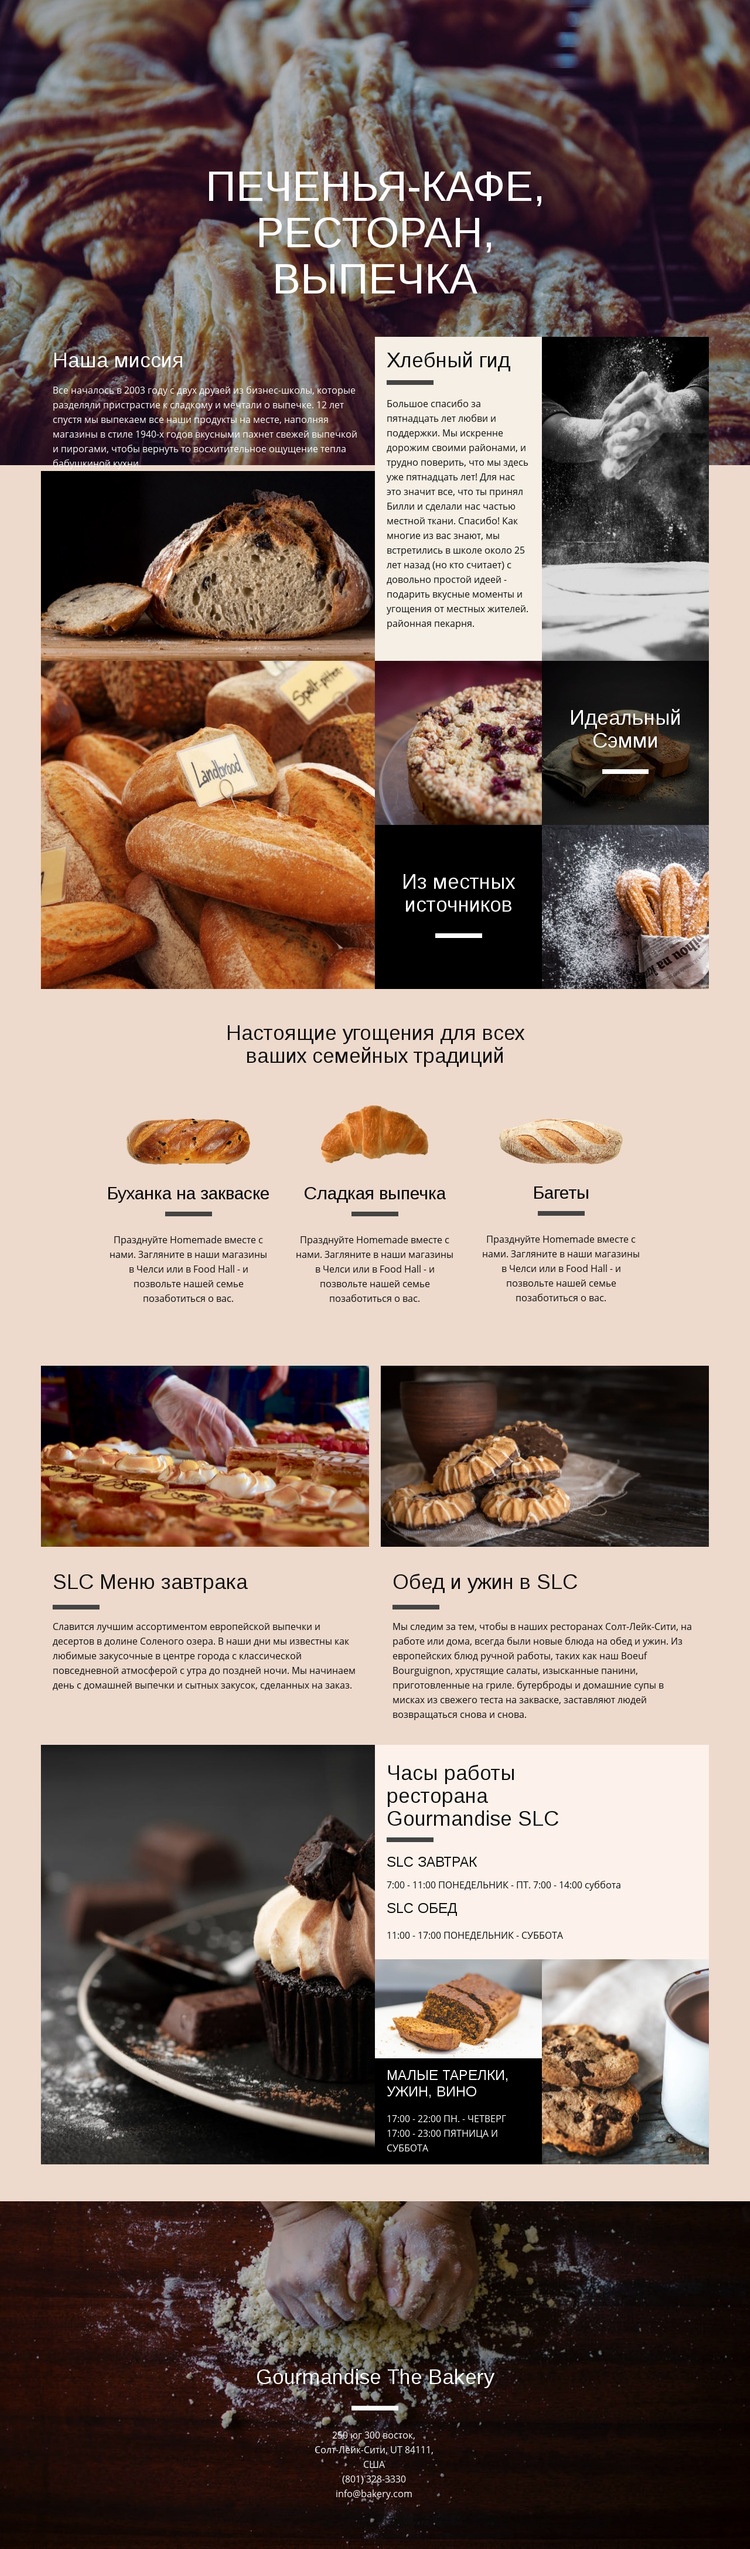 Пекарня Мокап веб-сайта